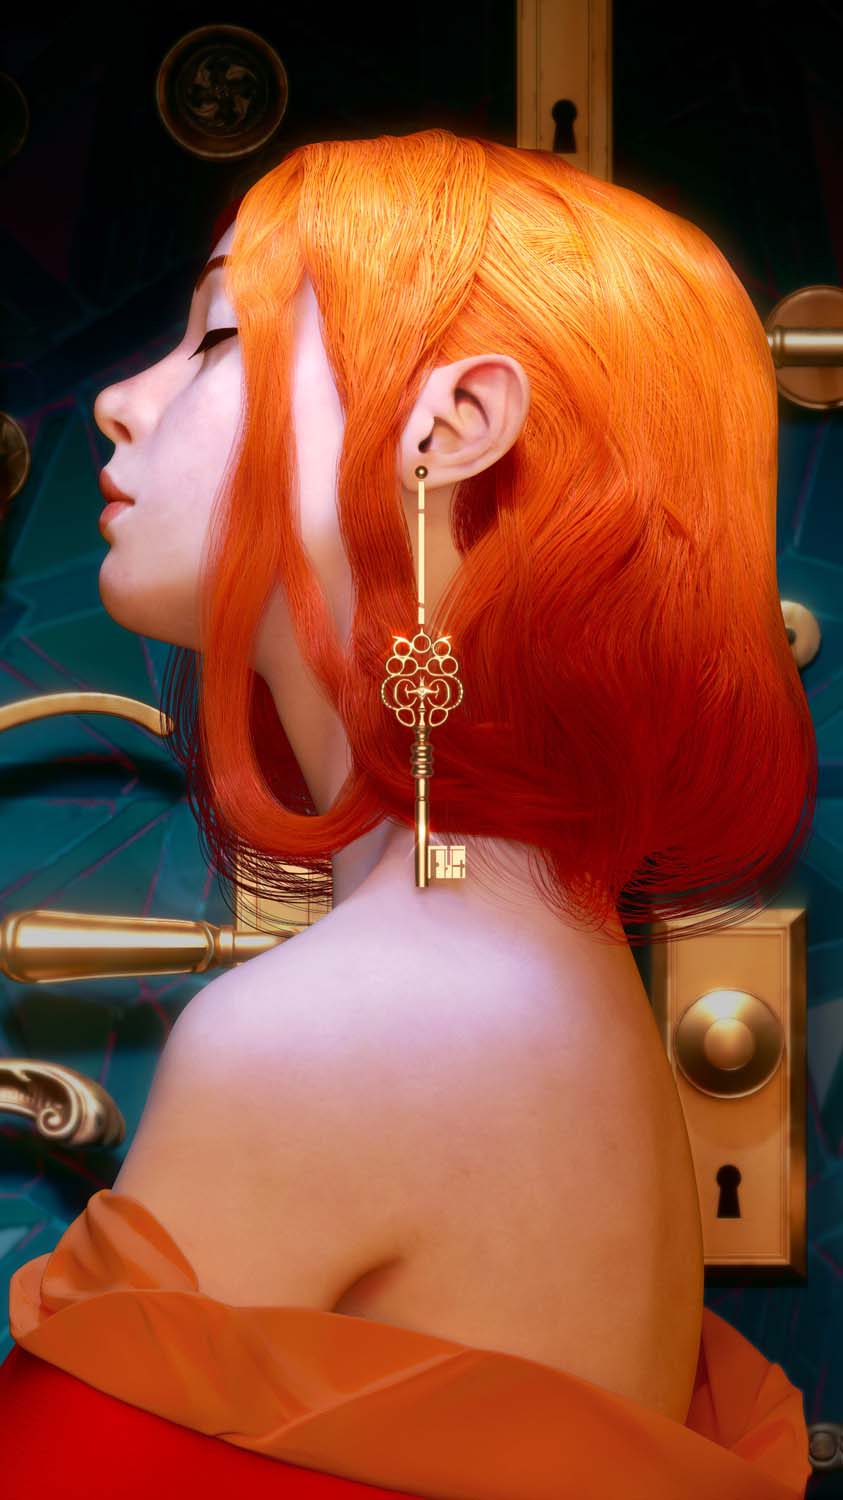 Redhead Lady iPhone Wallpaper HD